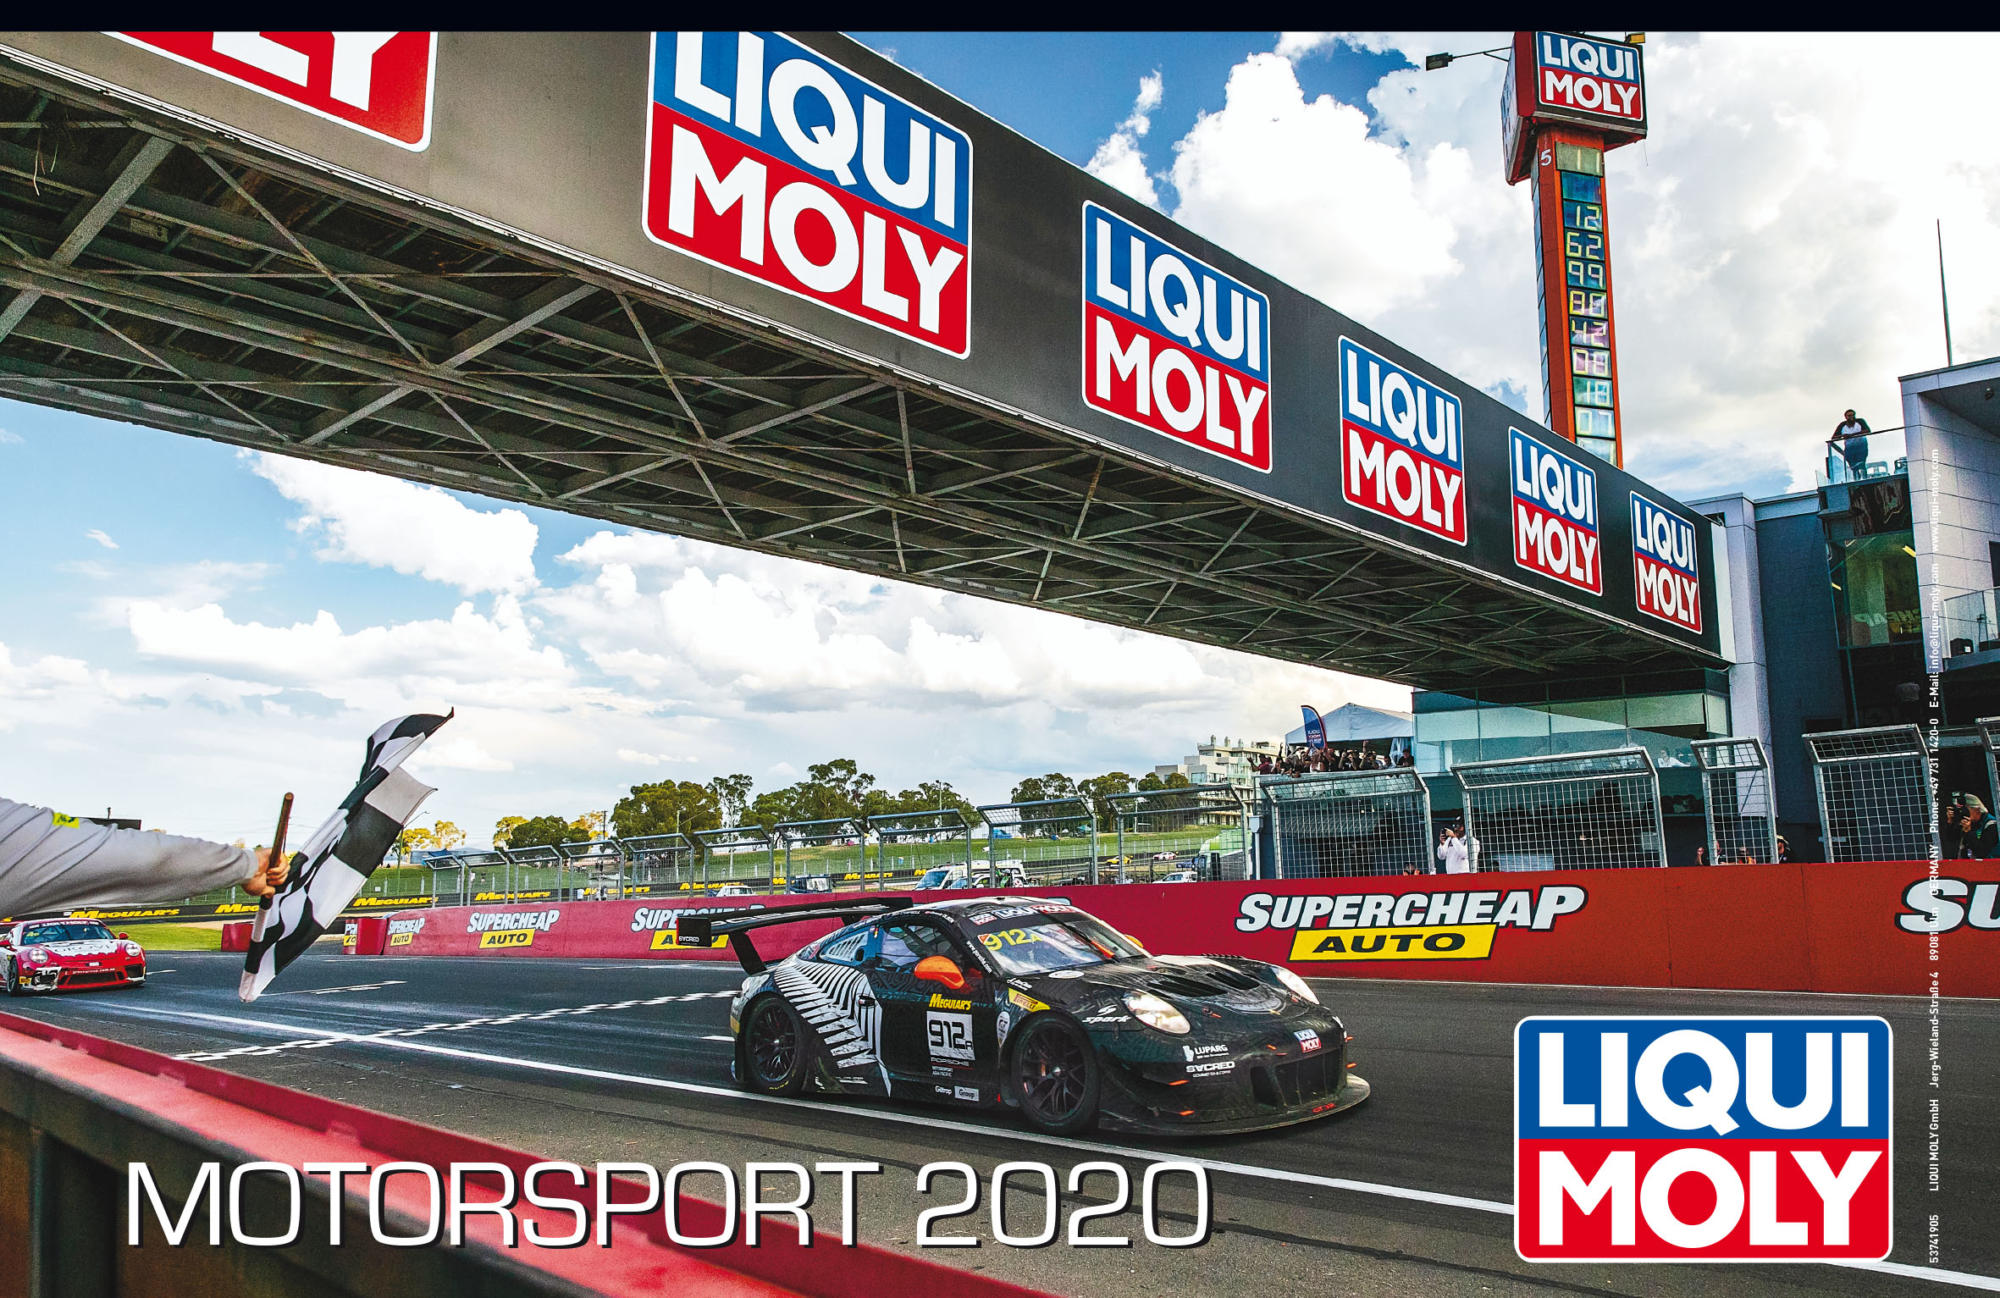 2020 Liqui Moly Motorsportkalender